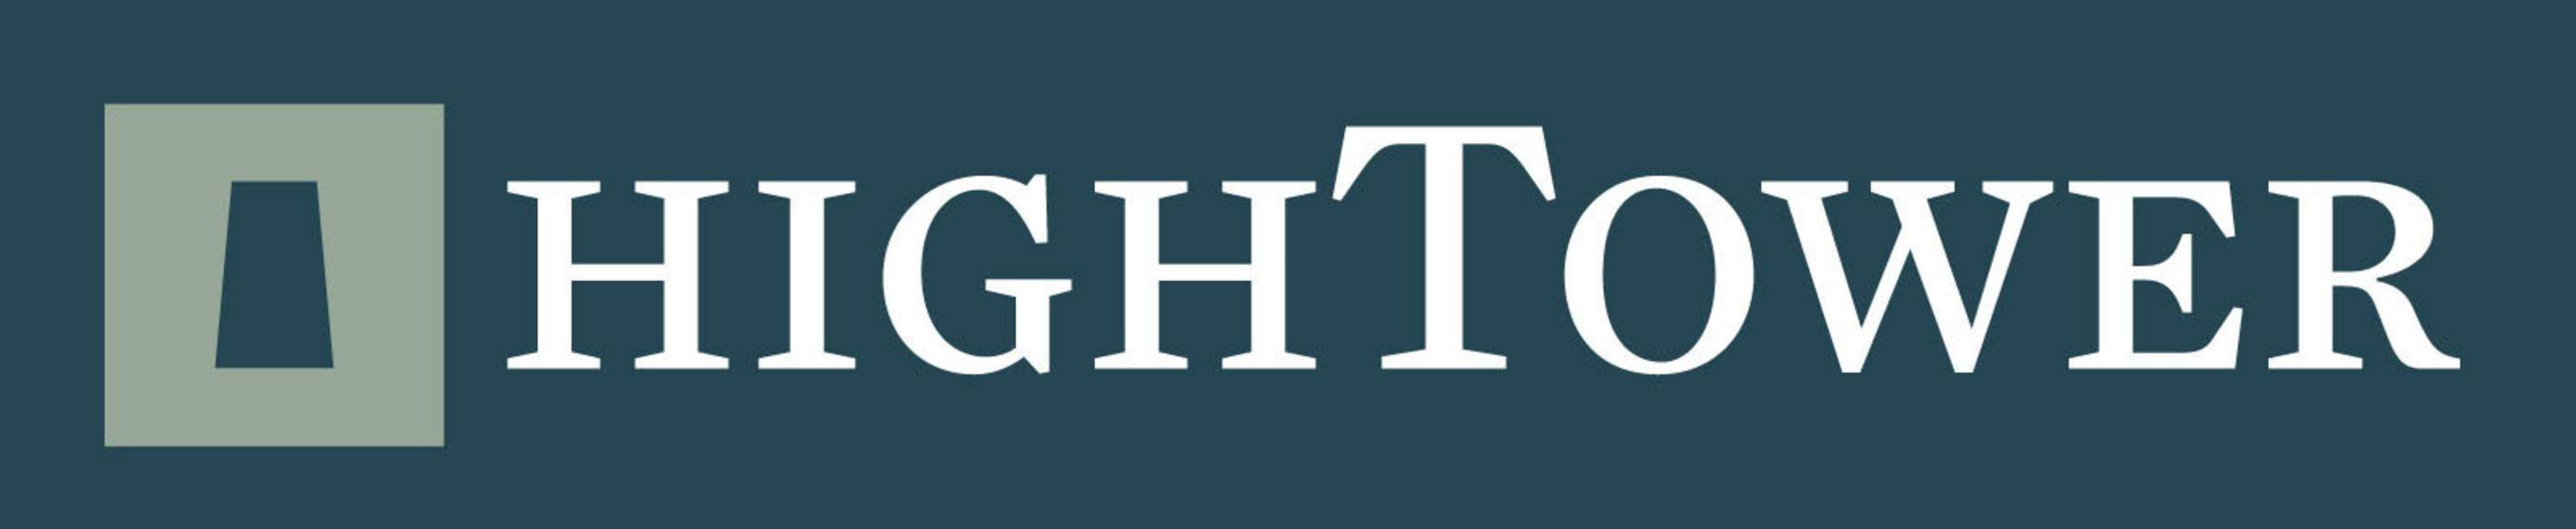 Hightower Logo - 12 HighTower Advisors Secure Spots on Barron's 2016 Top 1200 ...